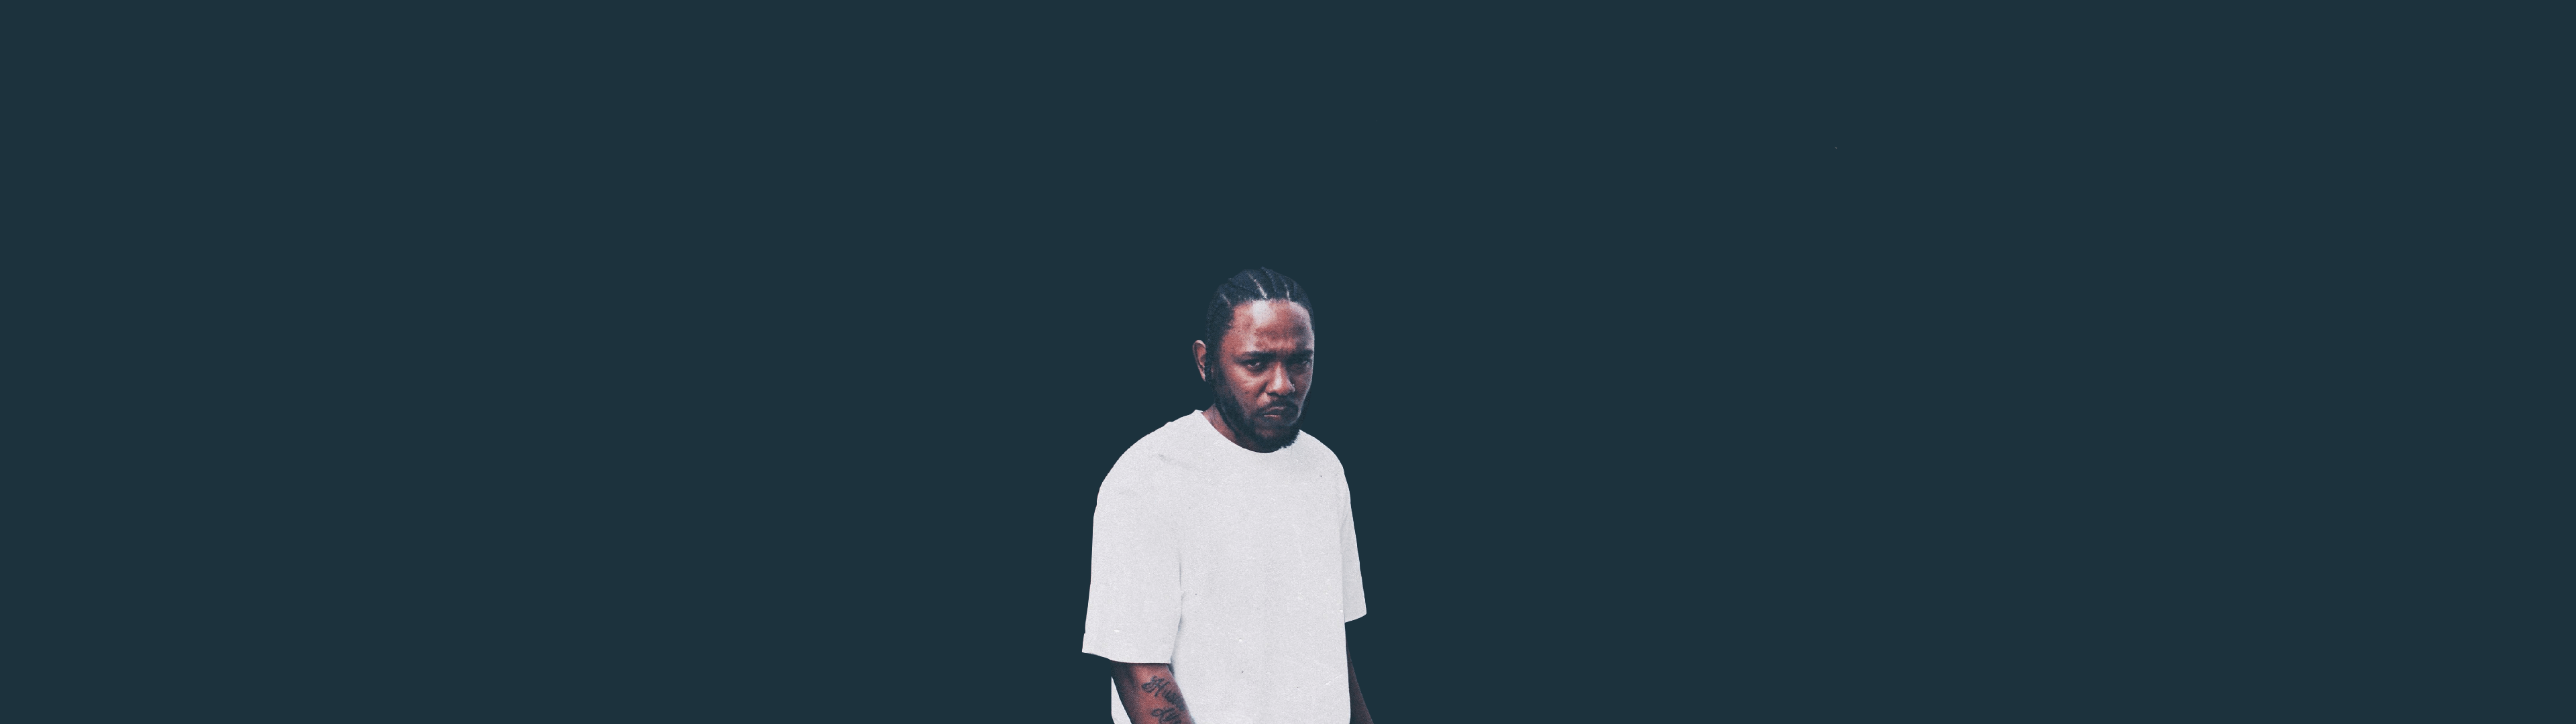 I made Kendrick Lamar wallpaper for dual monitor. [3840x1080]